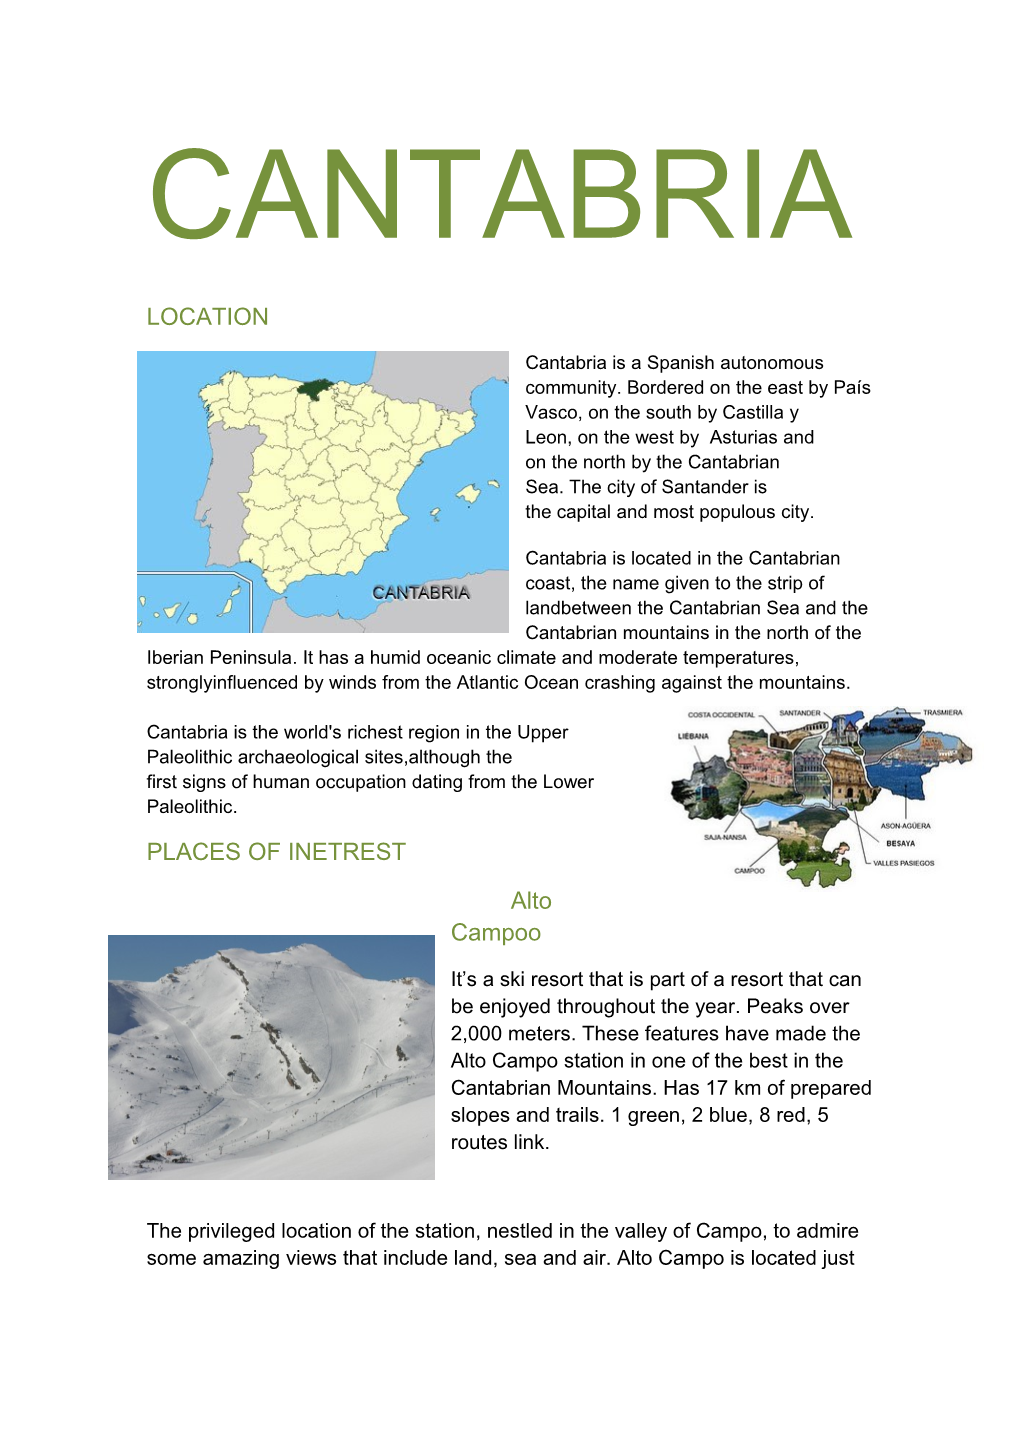 Cantabriaisa Spanish Autonomous Community.Bordered on Theeast Bypaís Vasco, on the South